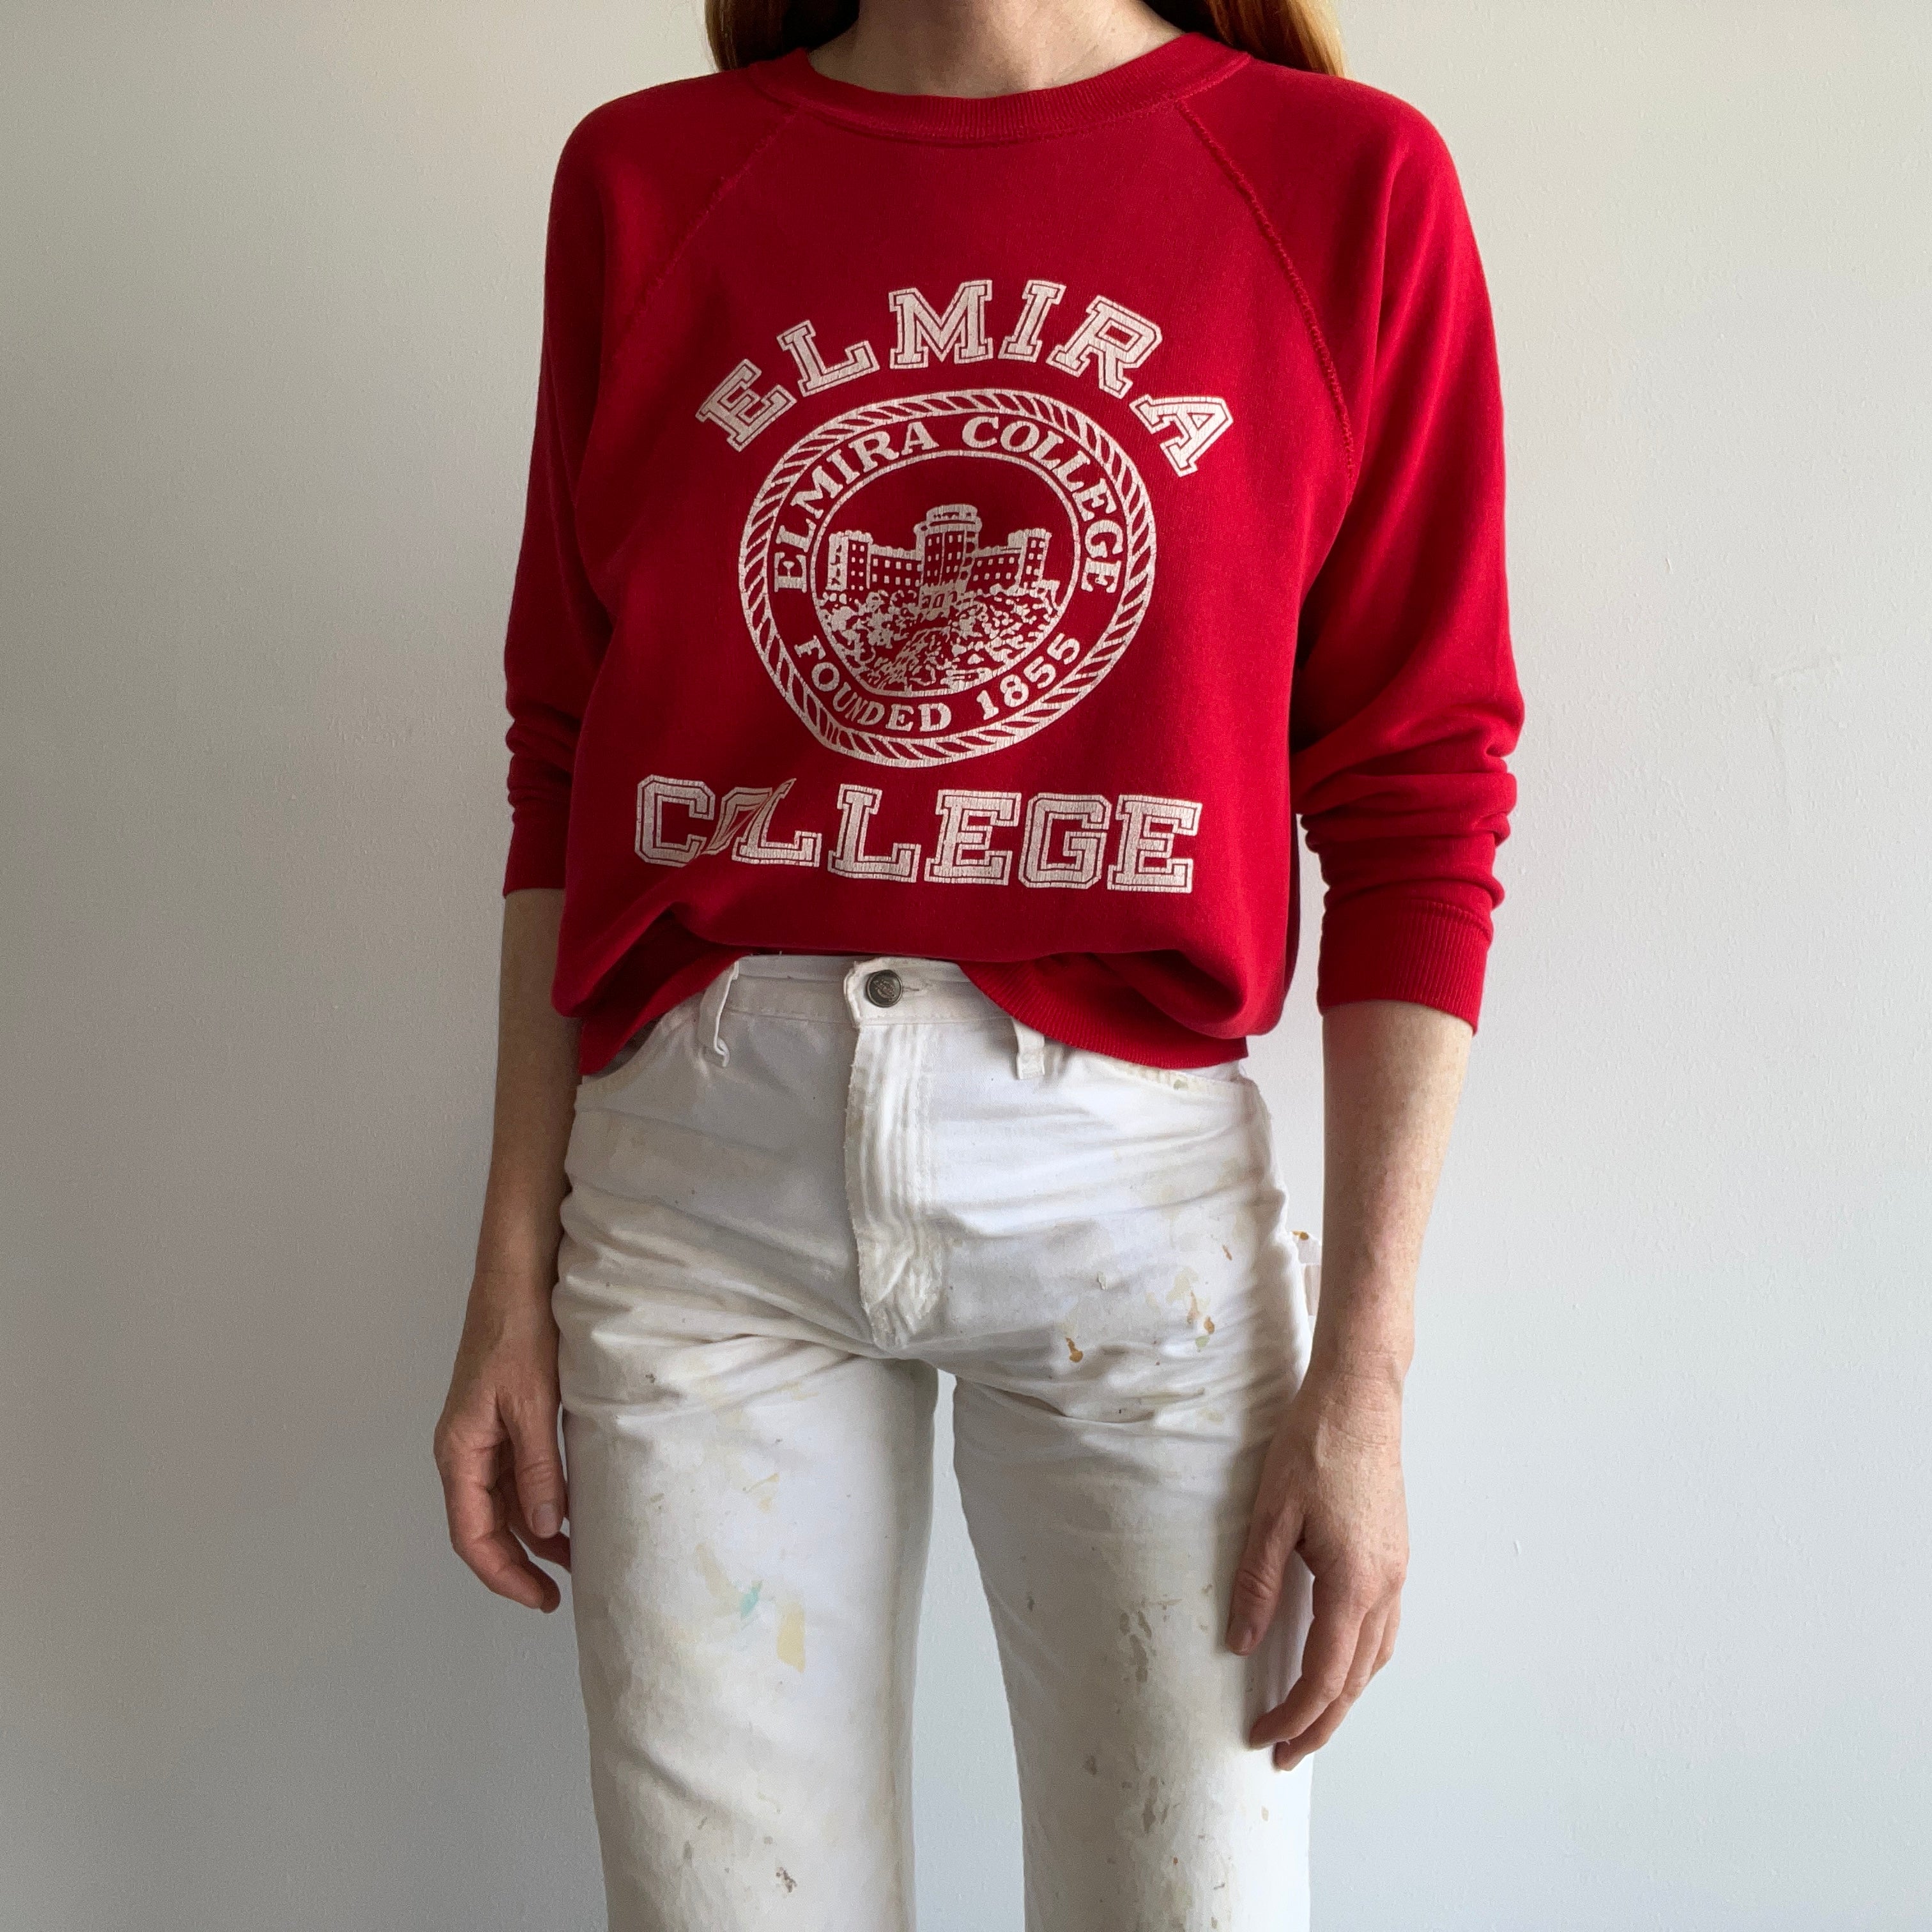 1980s Elmira College Sweatshirt - Super Soft and Slouchy